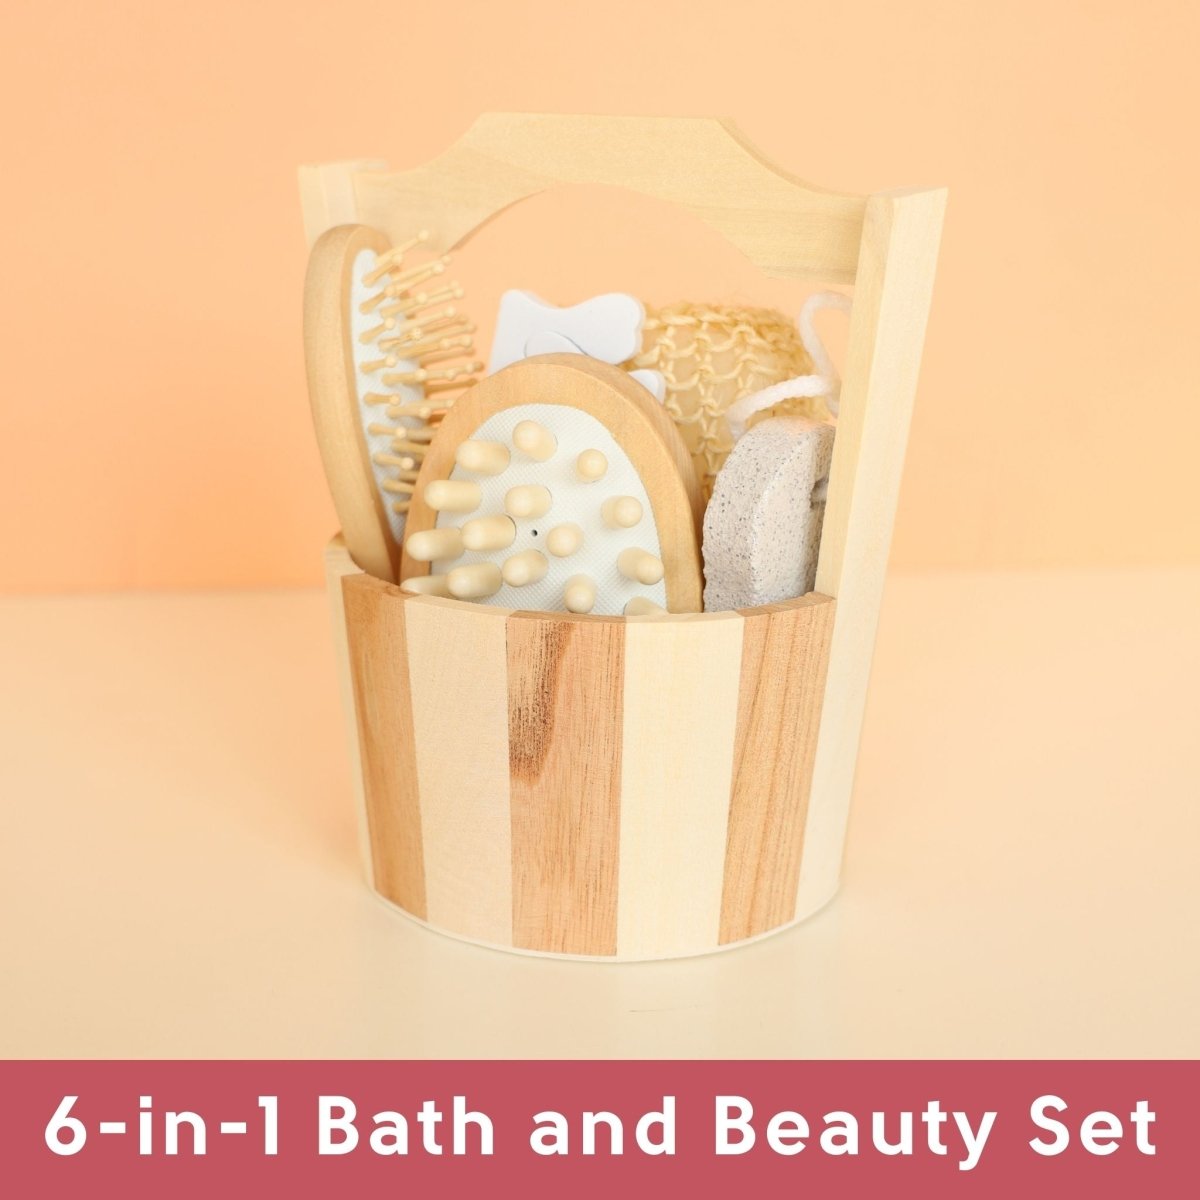 6-in-1 Bath Set, massage brush, hair brush, exfoliating sponge, toe separator, and, storage basket - Bellabae - Bathroom Accessories